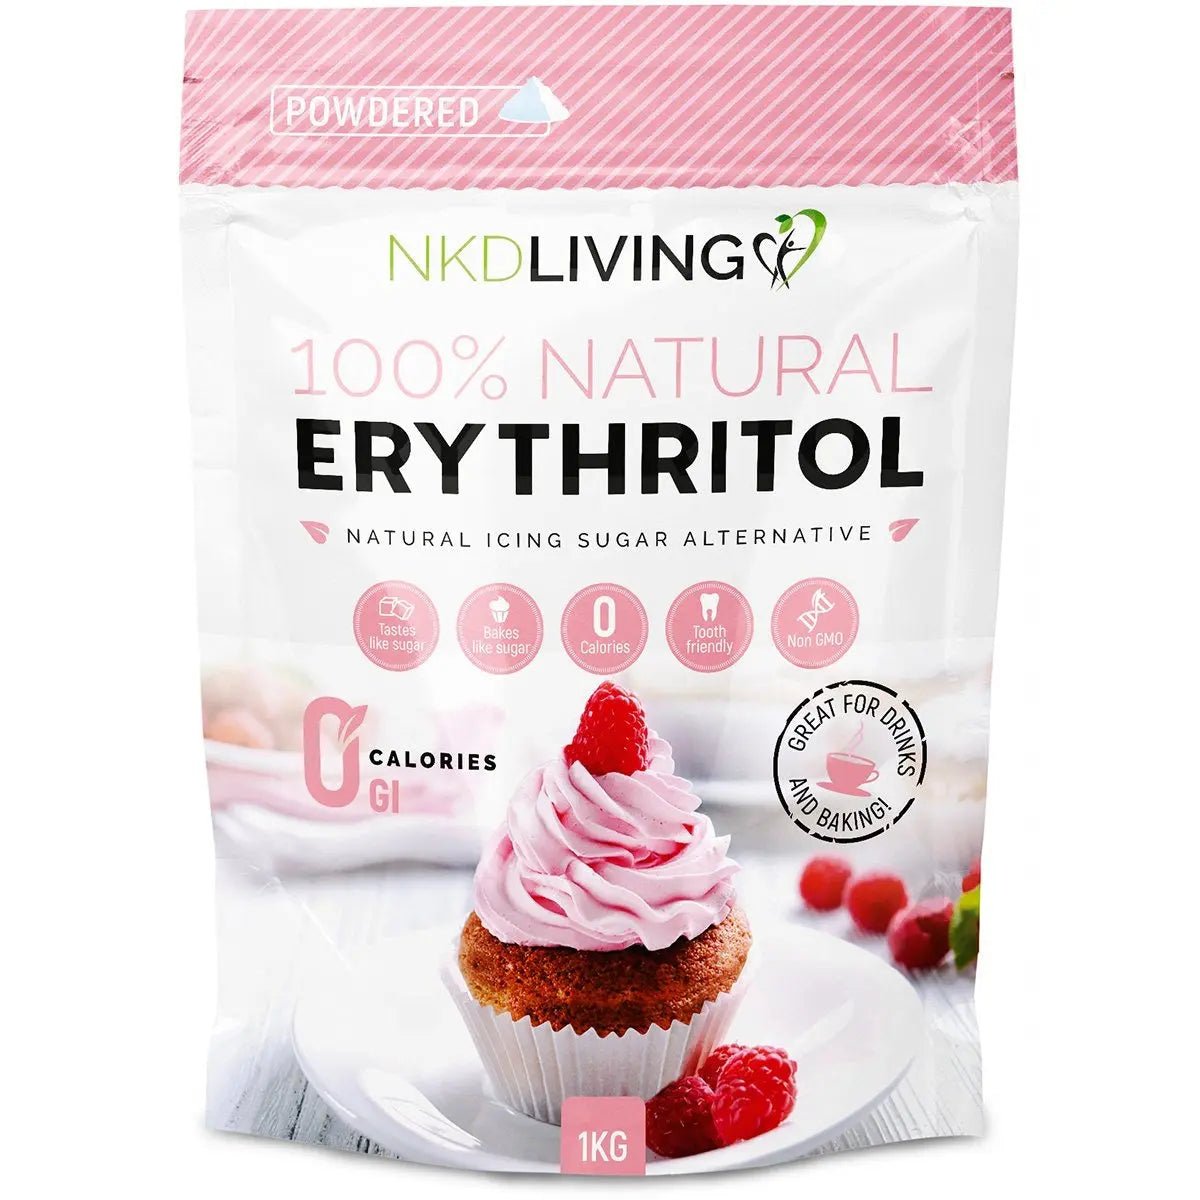 NKD Living Powdered Erythritol Icing Sugar Alternative 1kg - Sweet Victory Products Ltd